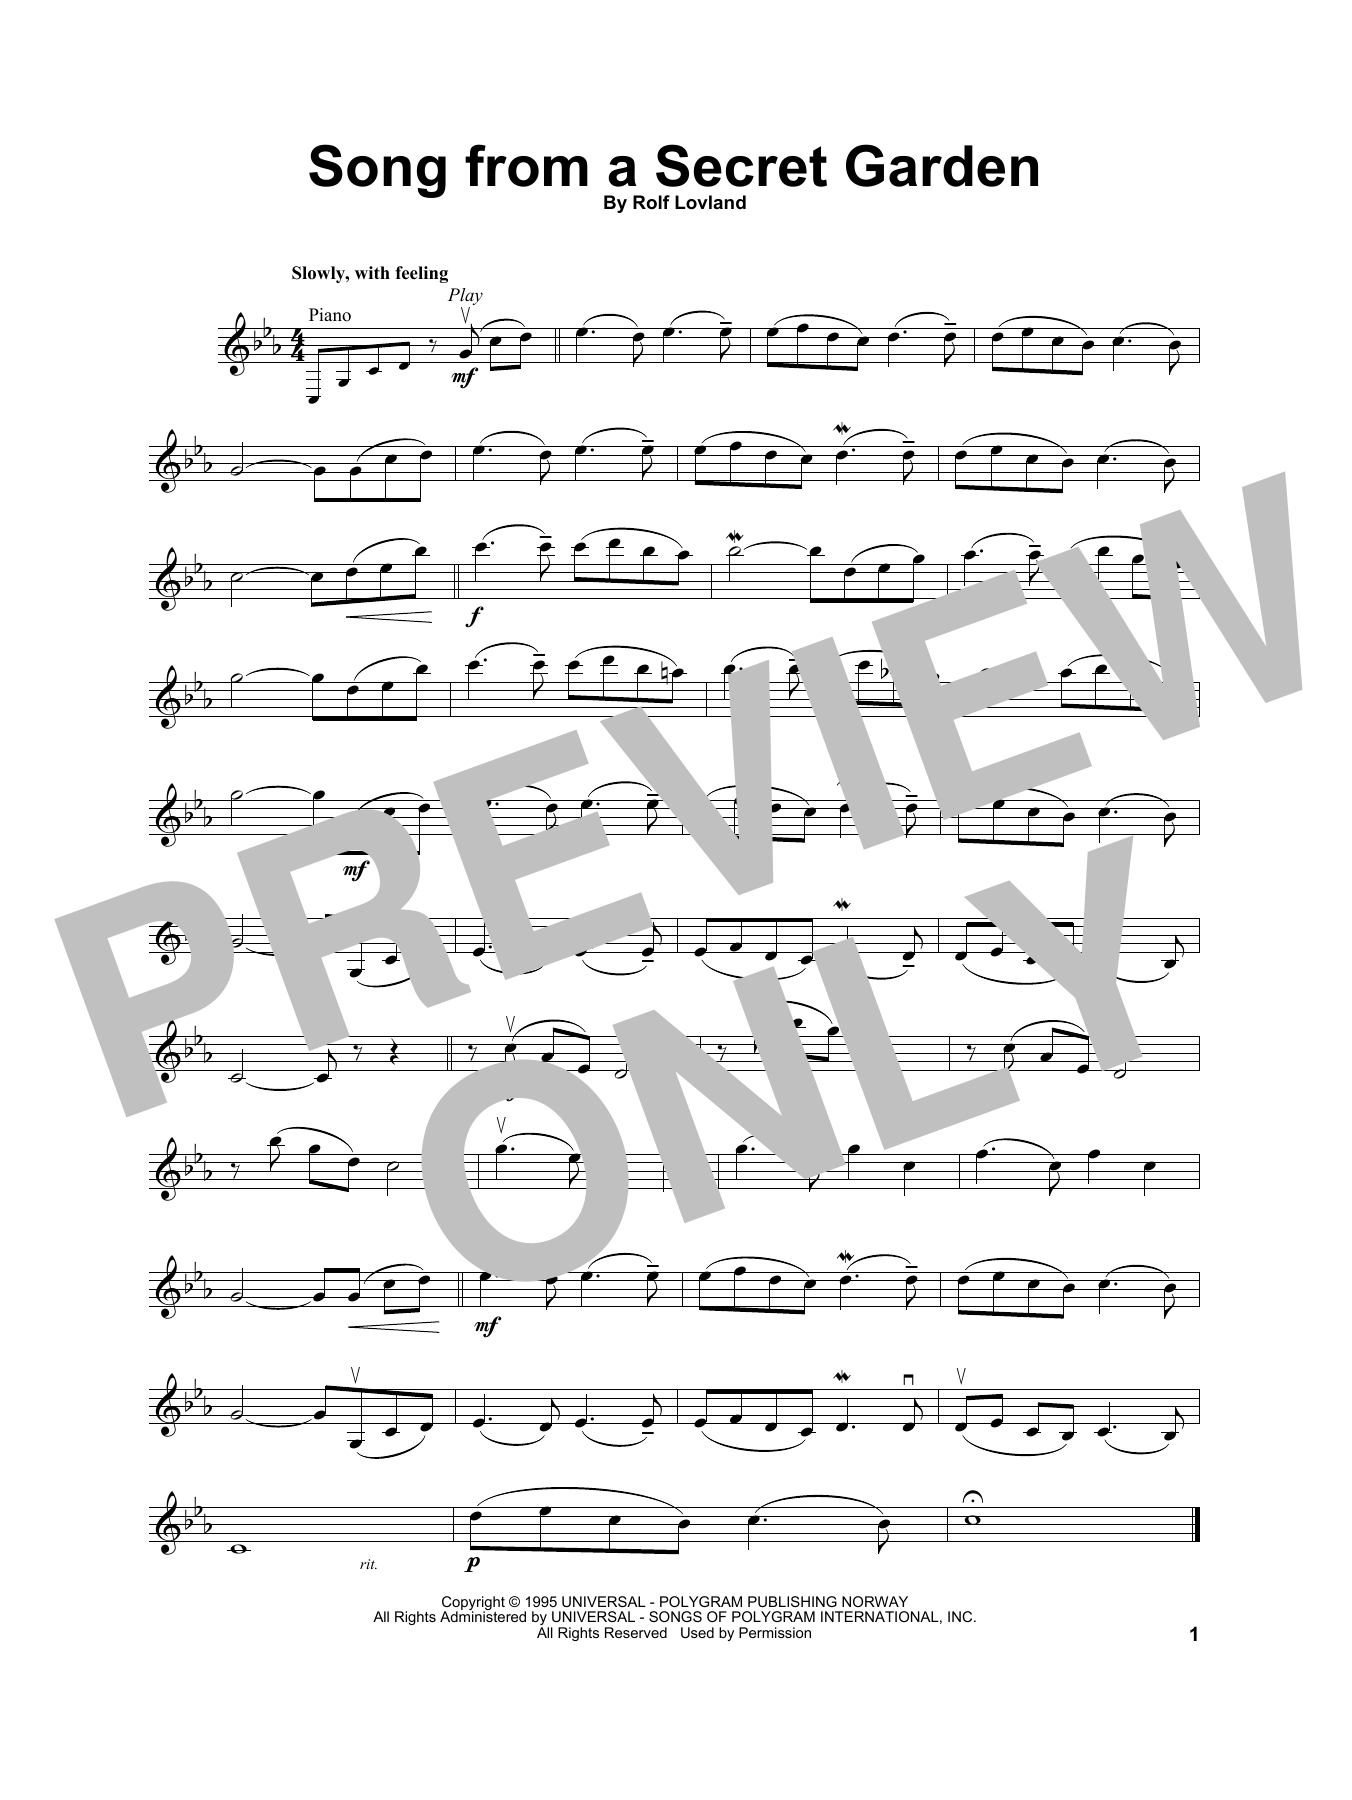 Secret Garden Song From A Secret Garden Sheet Music Notes & Chords for Violin Solo - Download or Print PDF